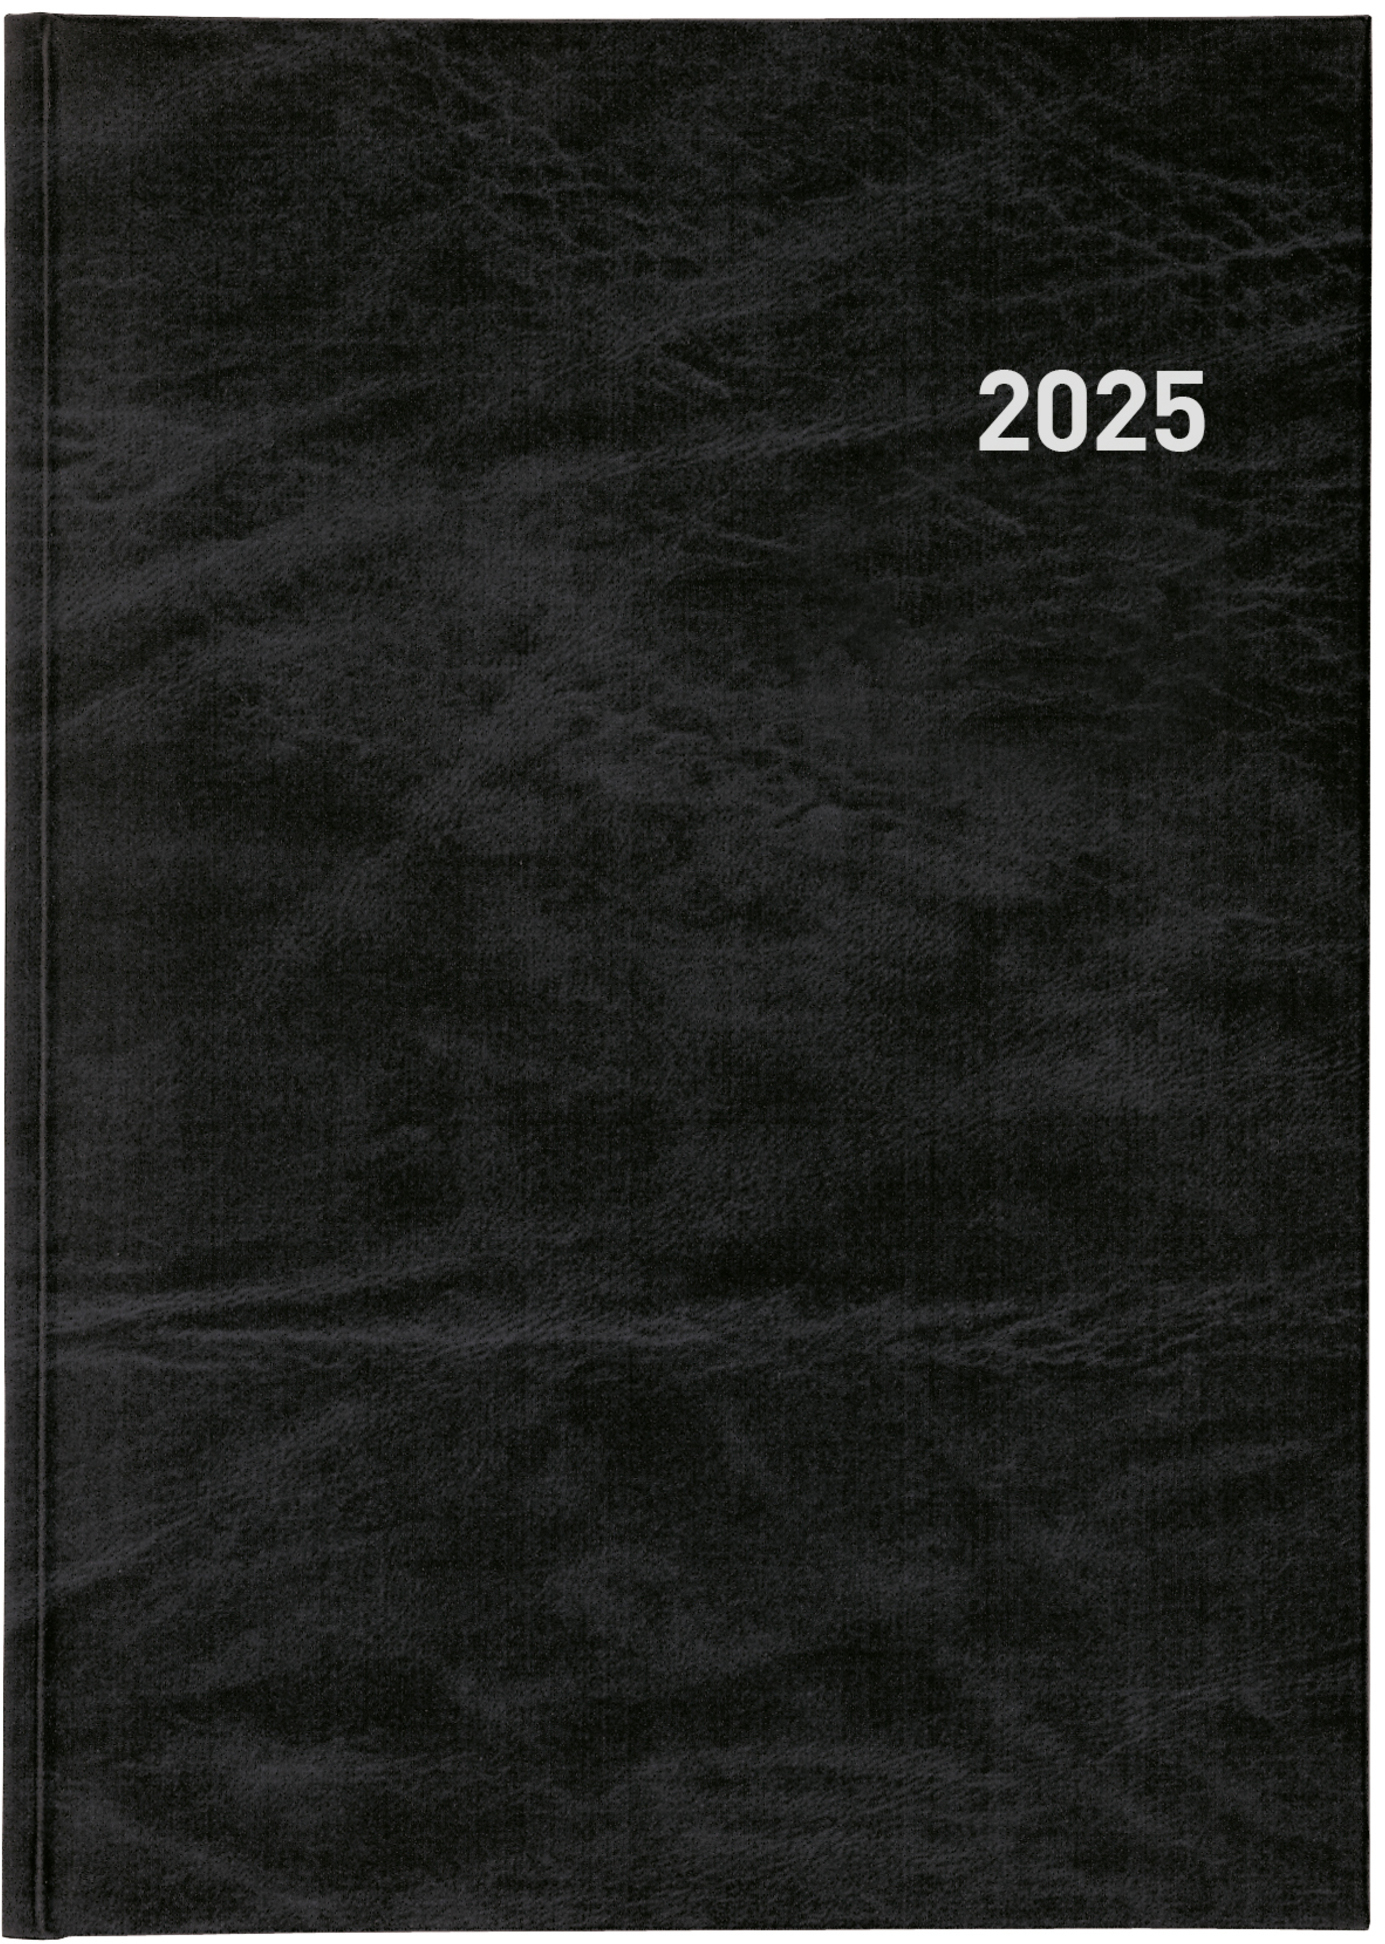 BIELLA Agenda Registra 7 2025 809507020025 1S/2P noir ML 17.2x24cm 1S/2P noir ML 17.2x24cm